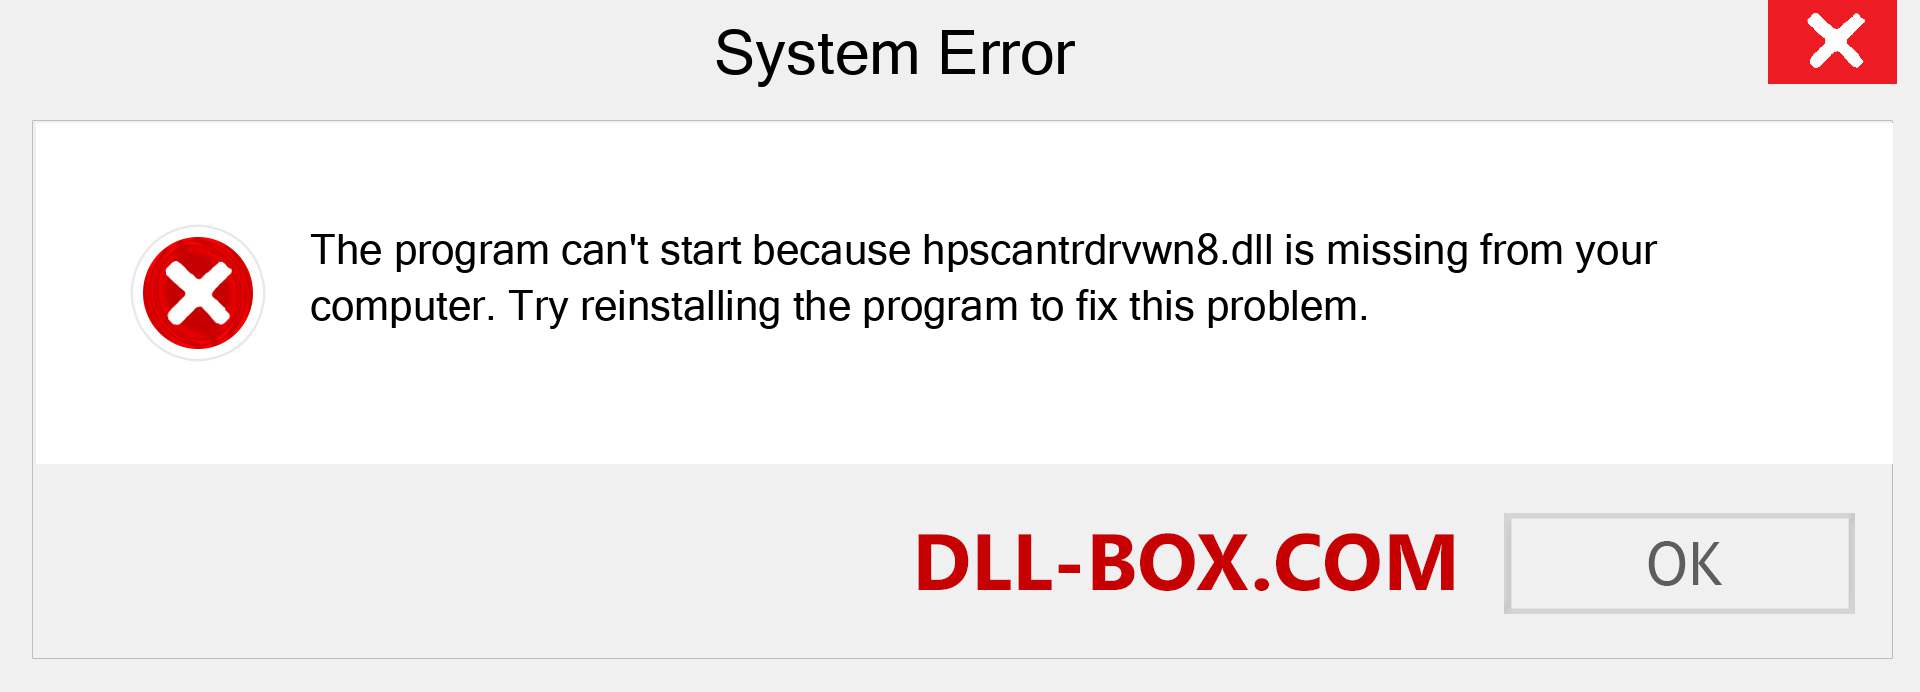  hpscantrdrvwn8.dll file is missing?. Download for Windows 7, 8, 10 - Fix  hpscantrdrvwn8 dll Missing Error on Windows, photos, images